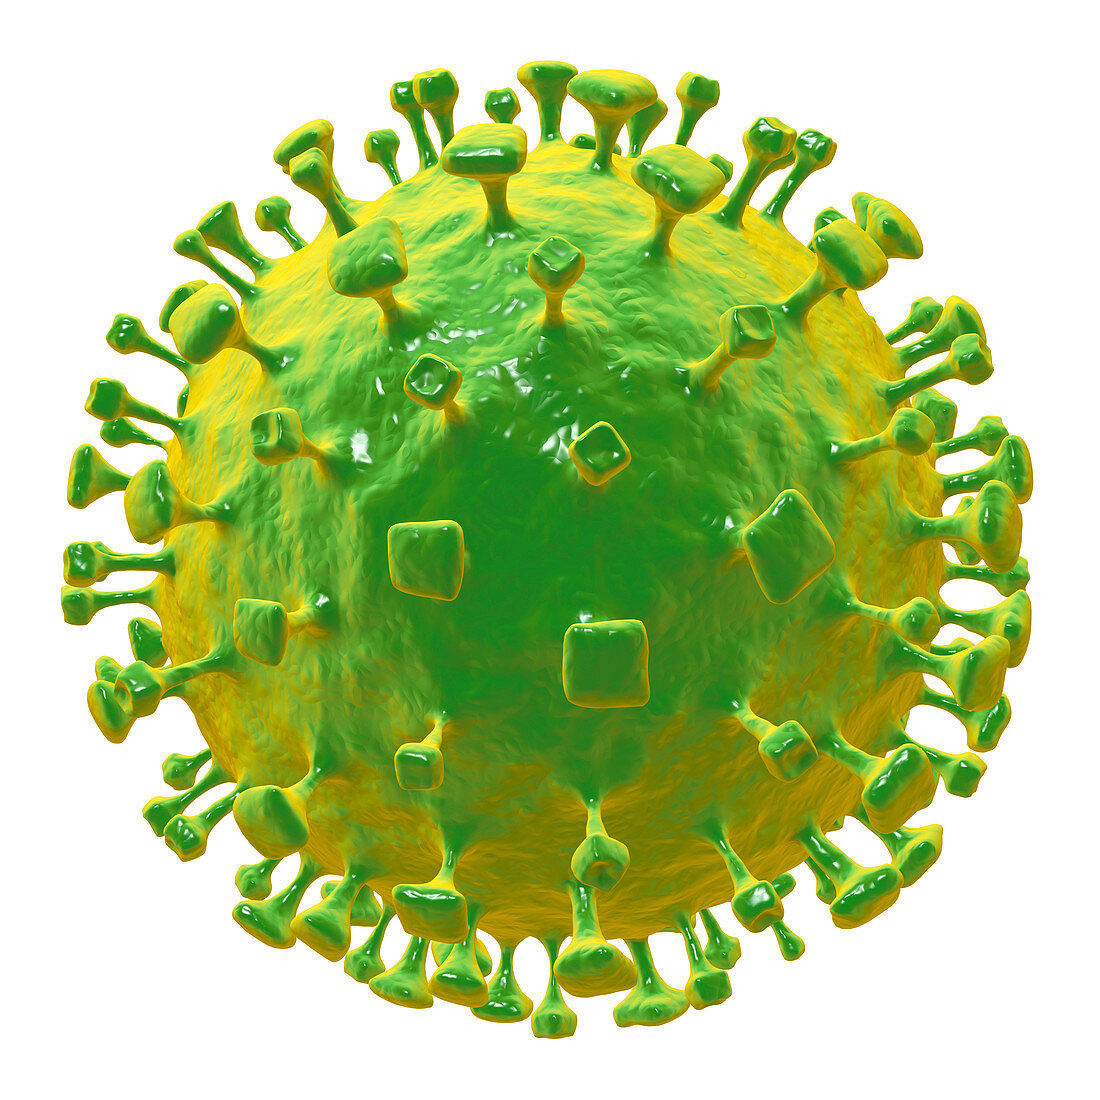 Nipah virus particle, illustration